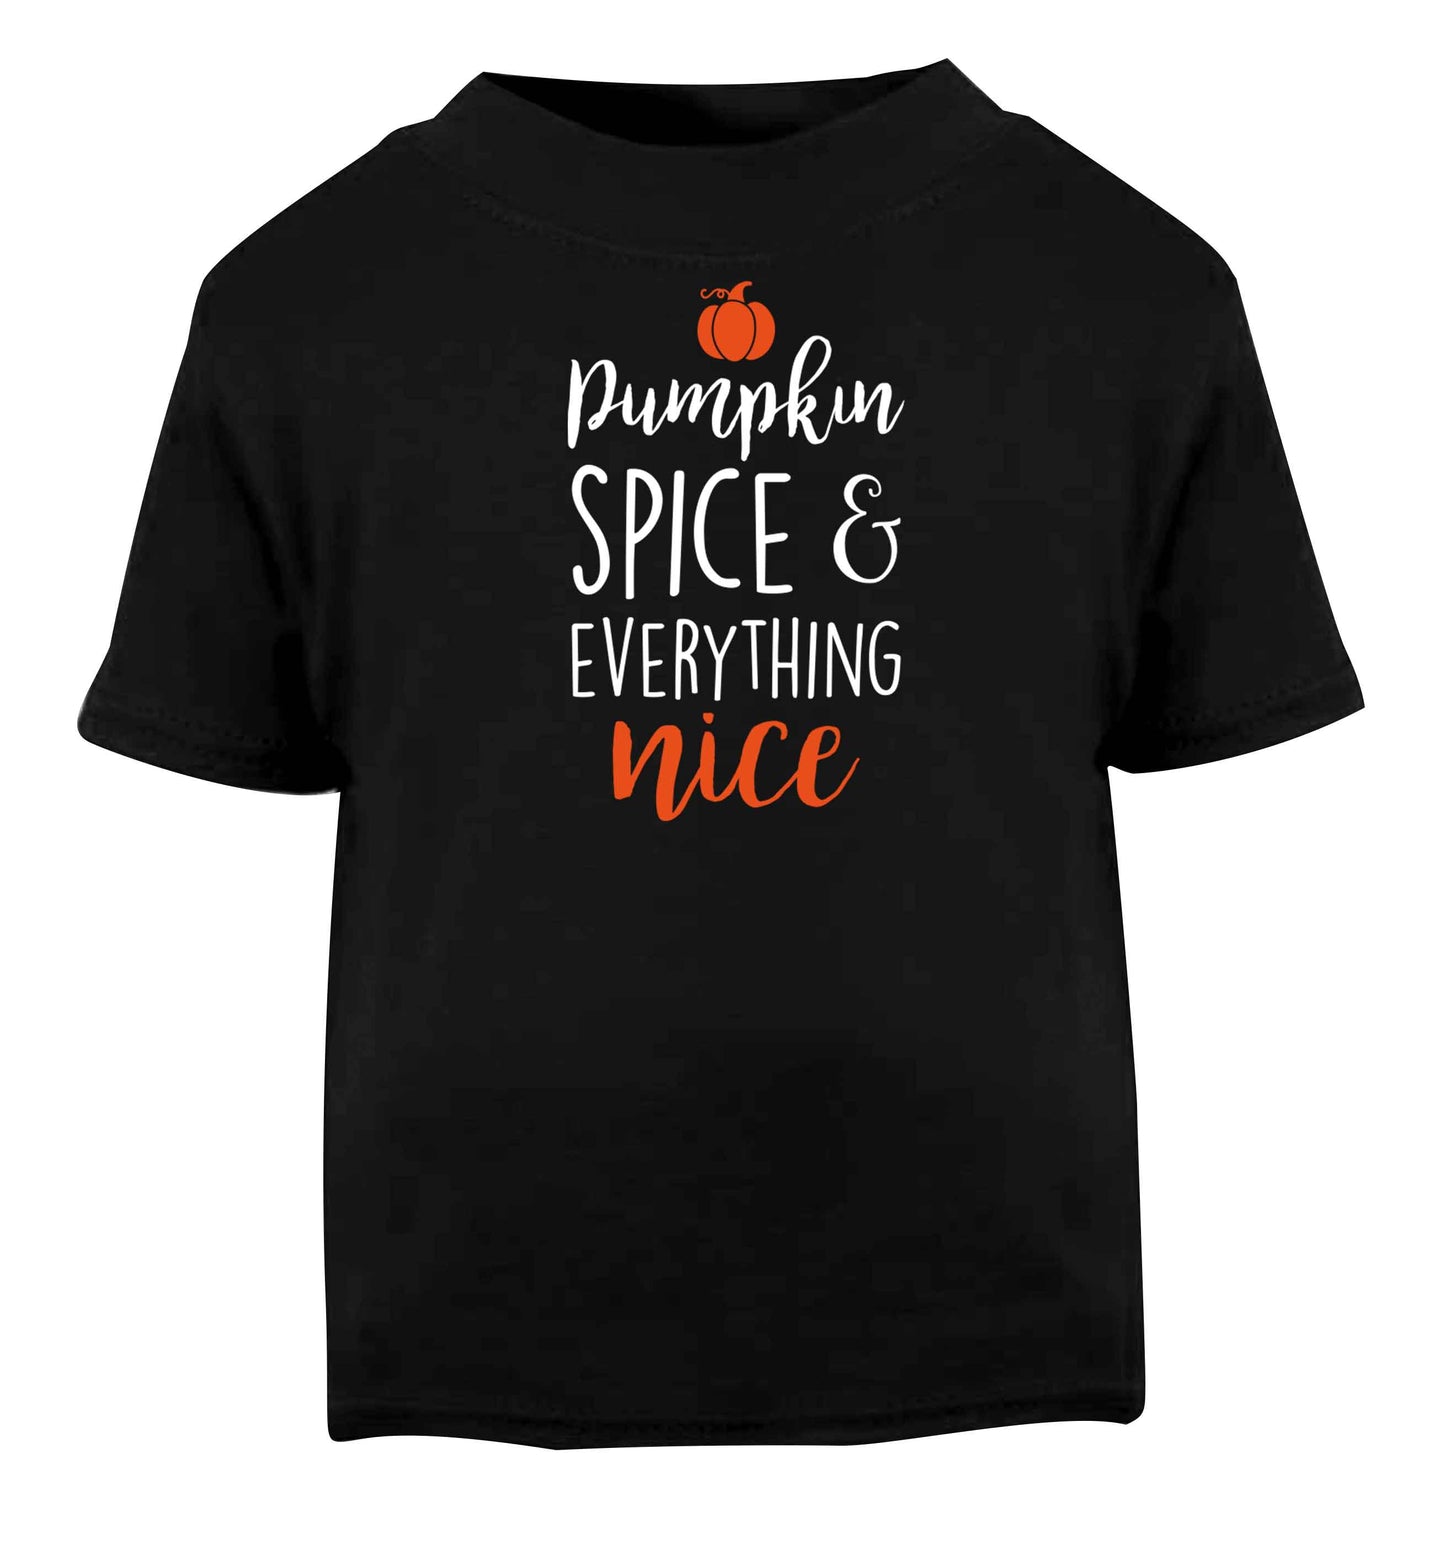 Pumpkin Spice Nice Black baby toddler Tshirt 2 years